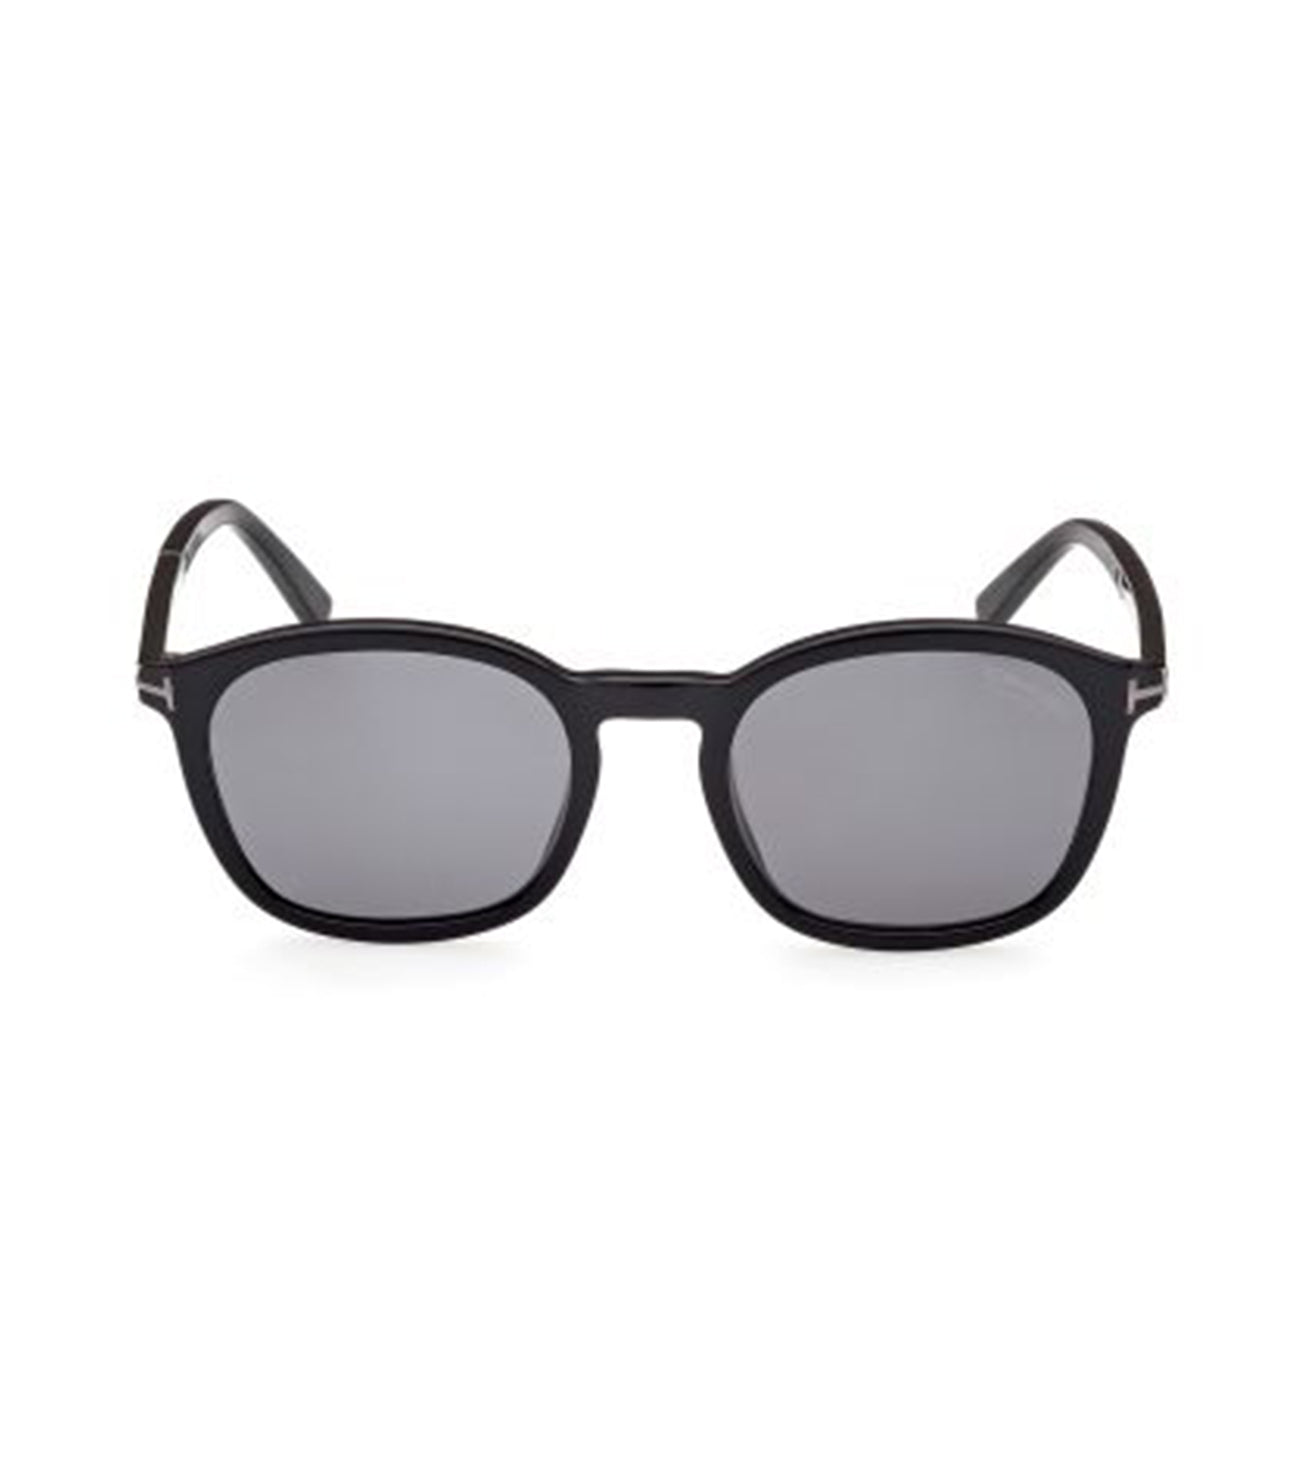 Tom Ford Jayson Men's Grey Polarized Square Sunglasses